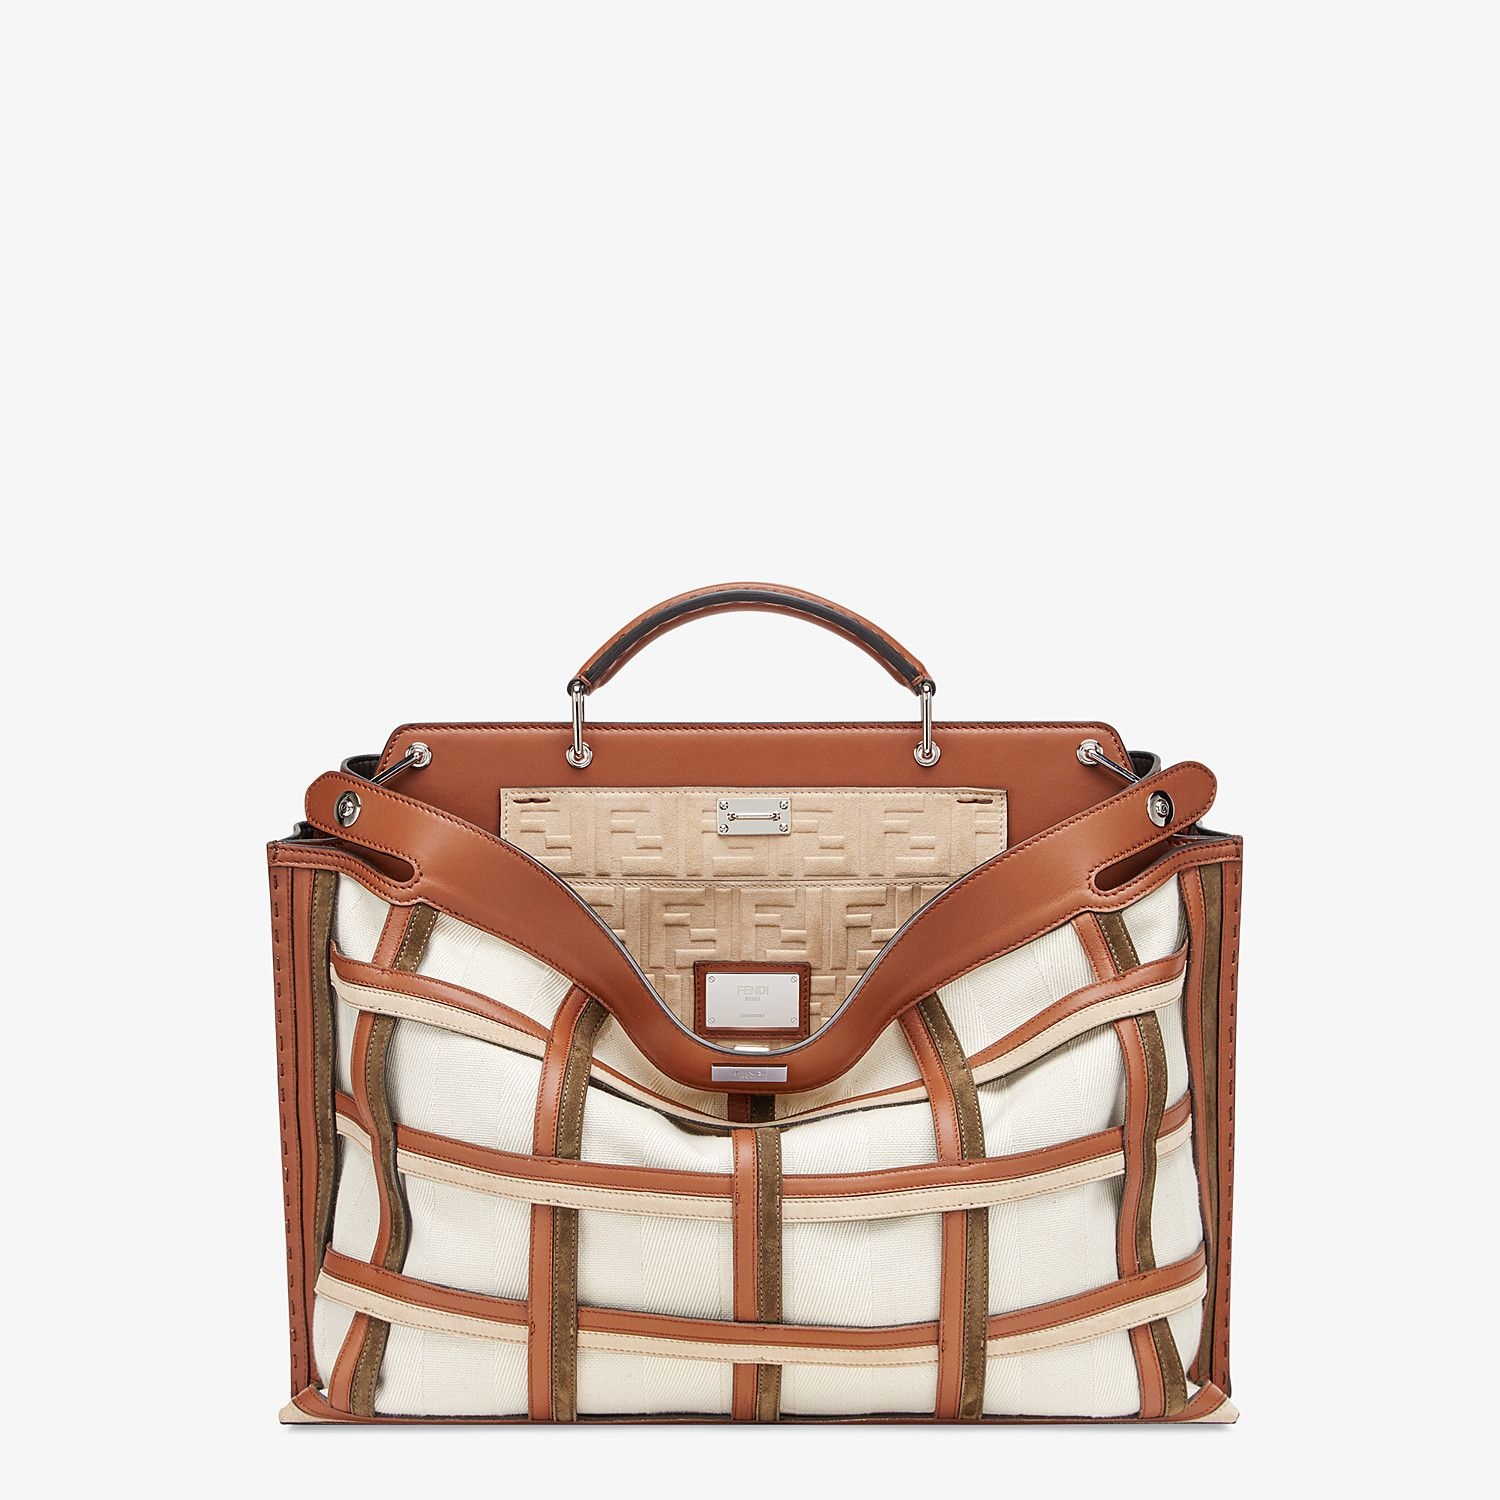 Brown leather bag - 1